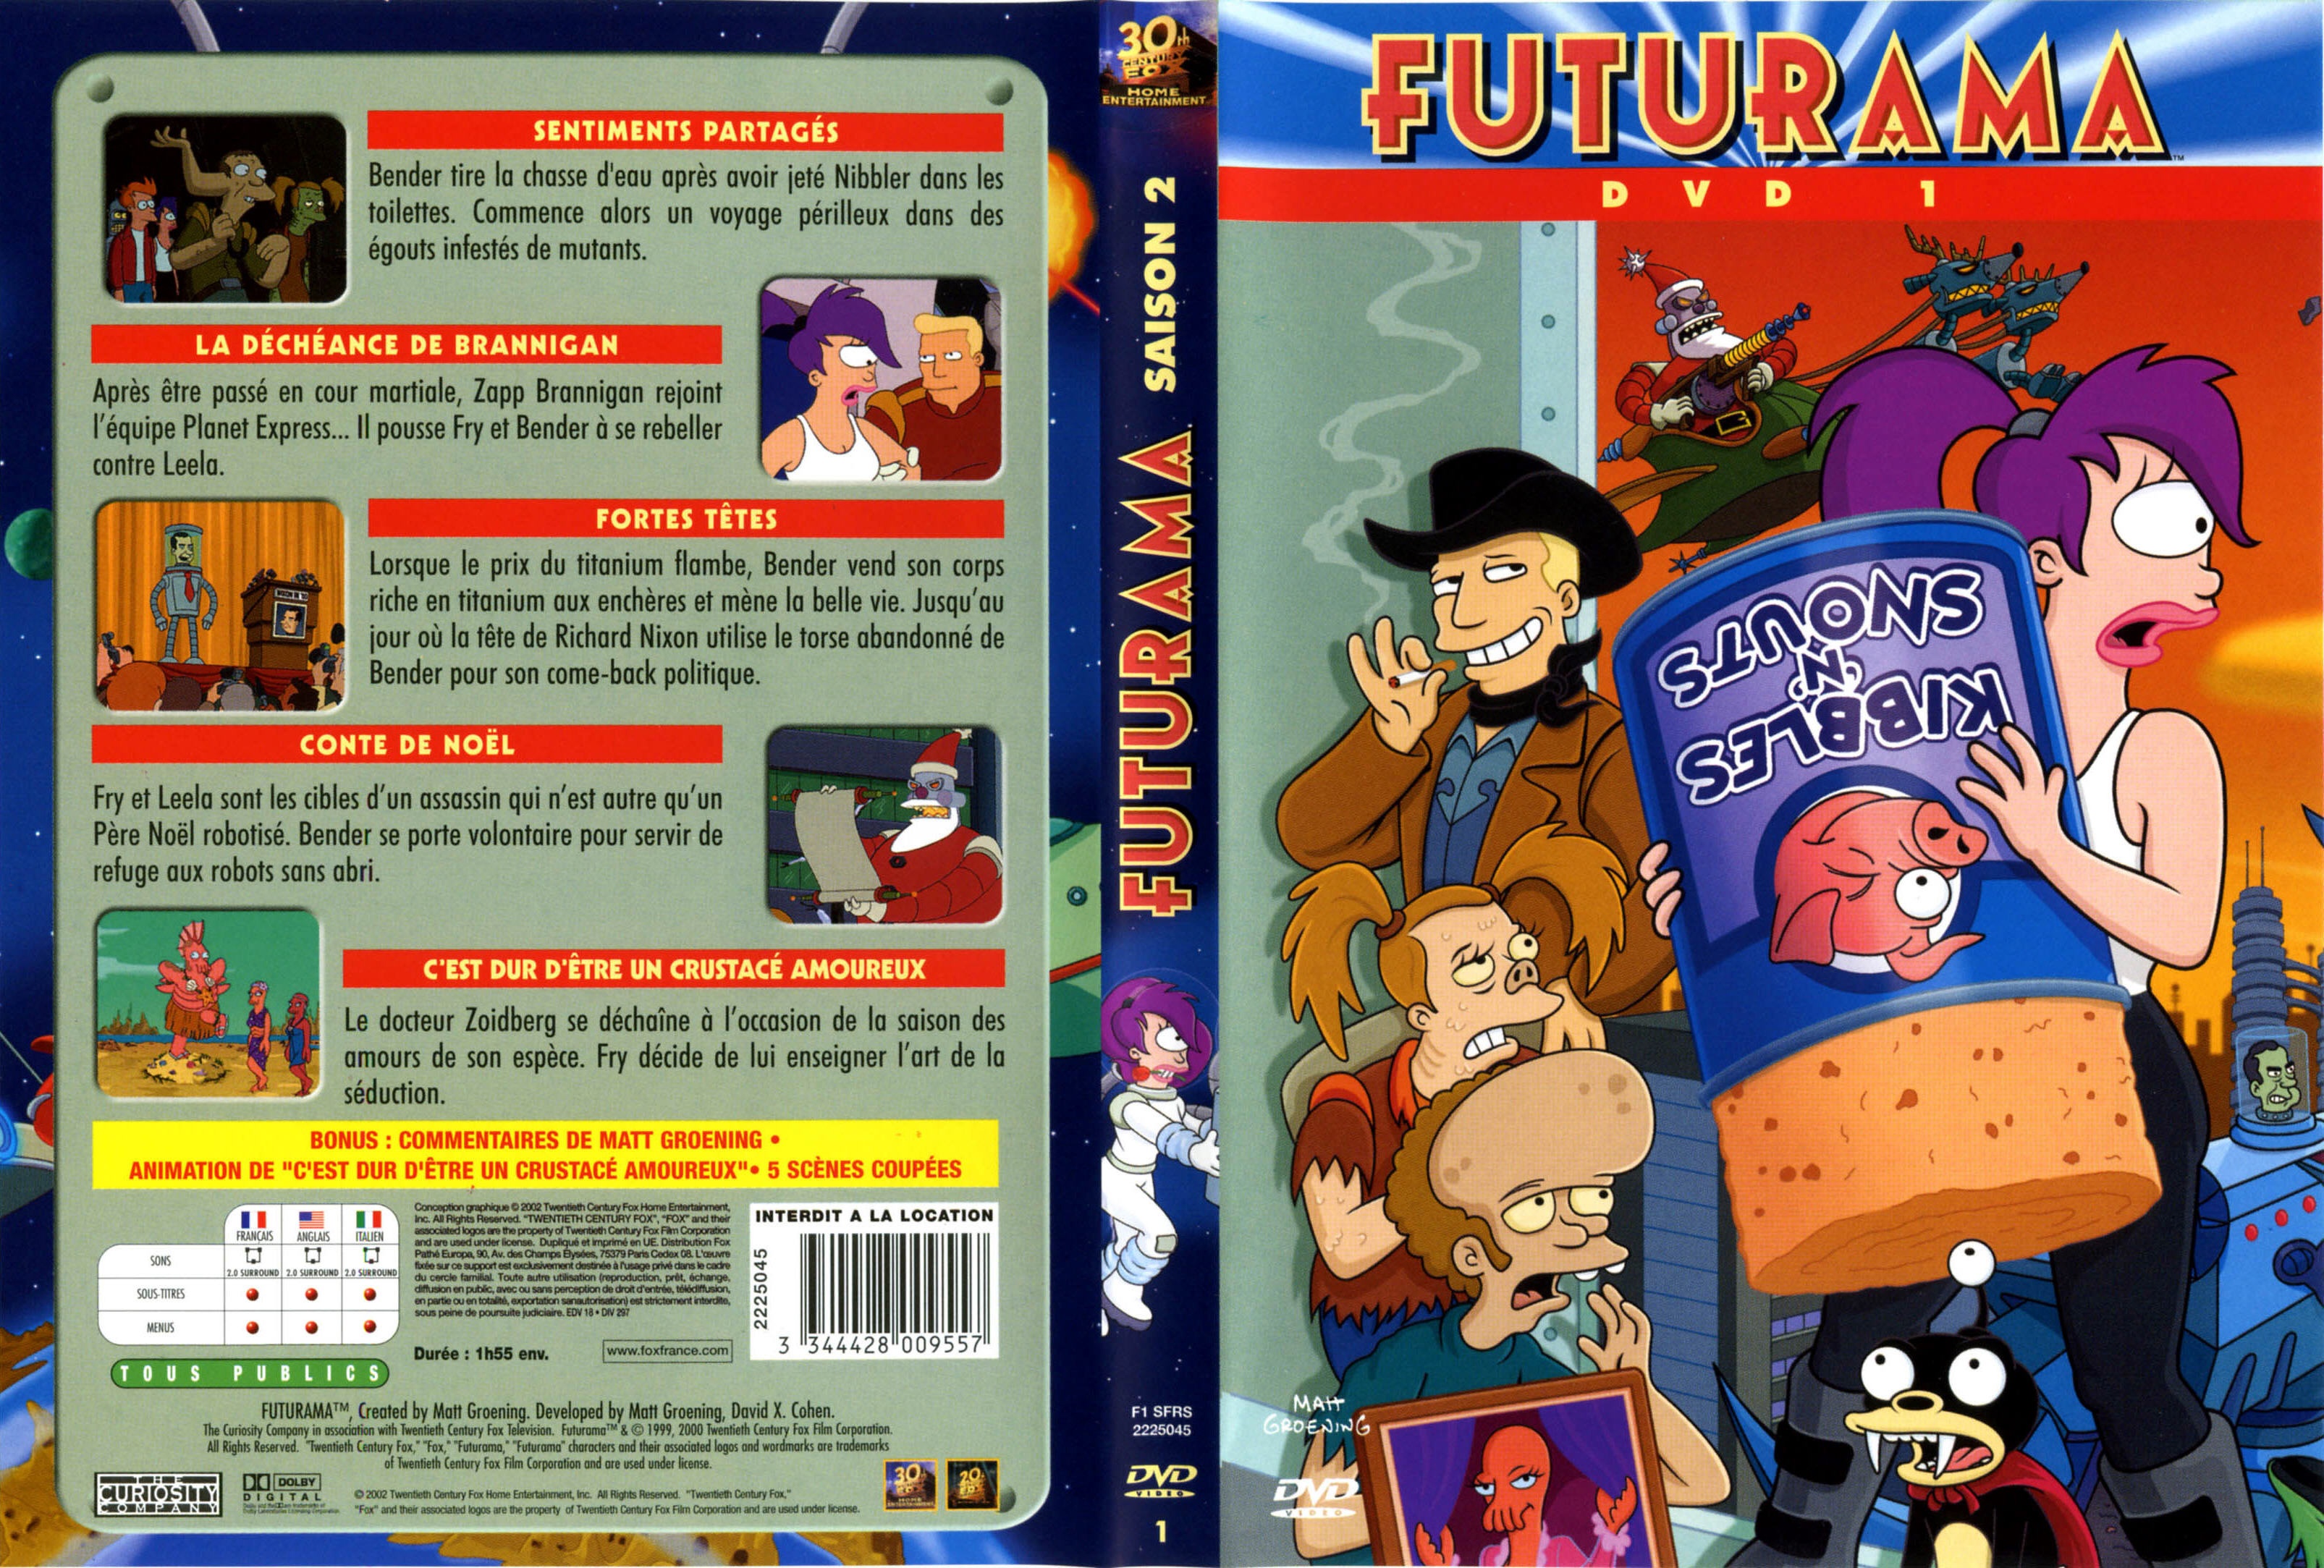 Jaquette DVD Futurama saison 2 DVD 1